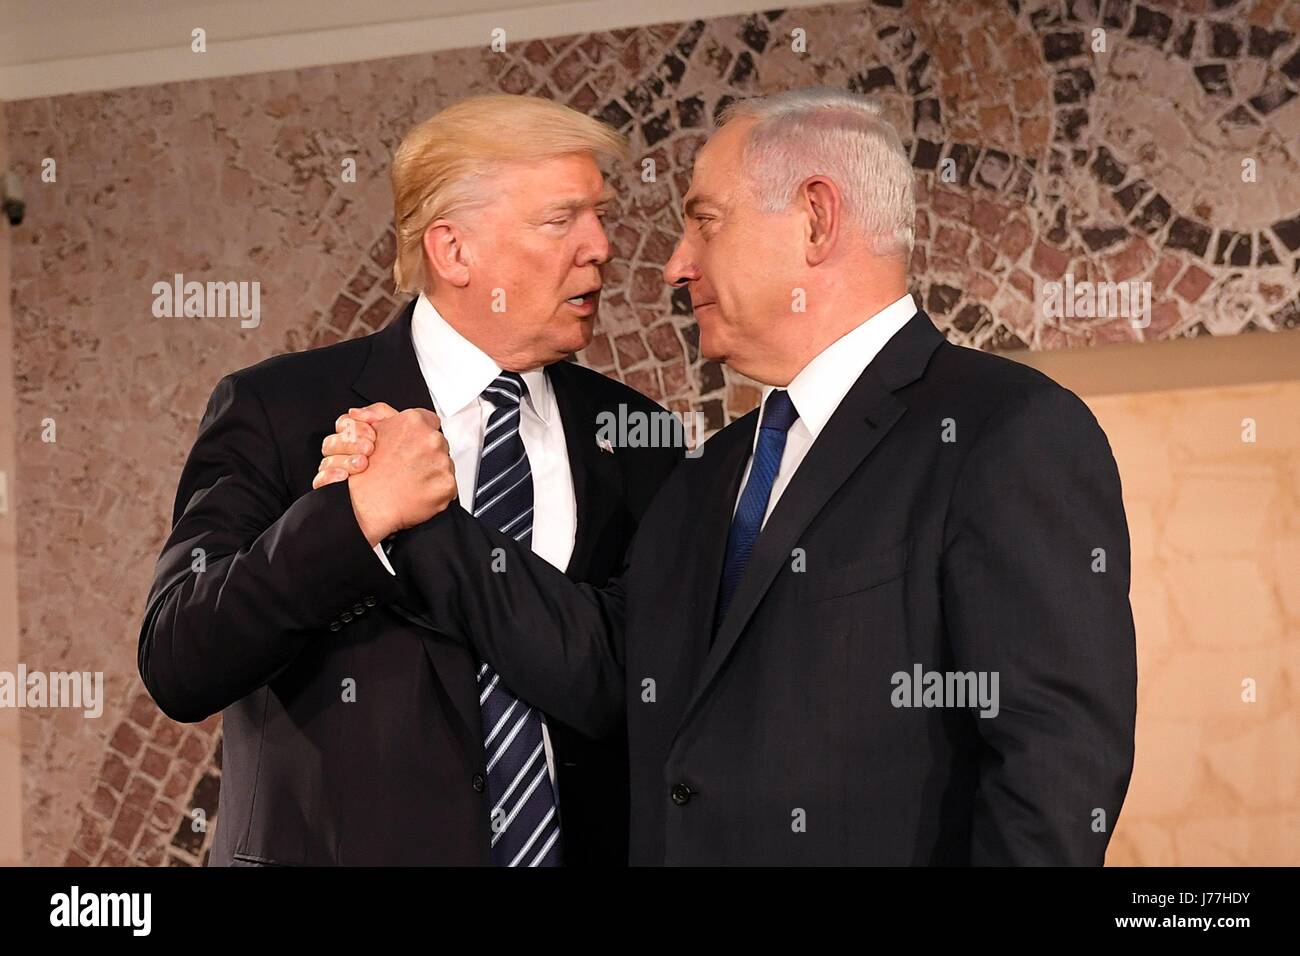 U.S. President Donald Trump shakes hands with Israeli Prime Minister Benjamin Netanyah following his address at the Israel Museum May 23, 2017 in Jerusalem, Israel. Stock Photo